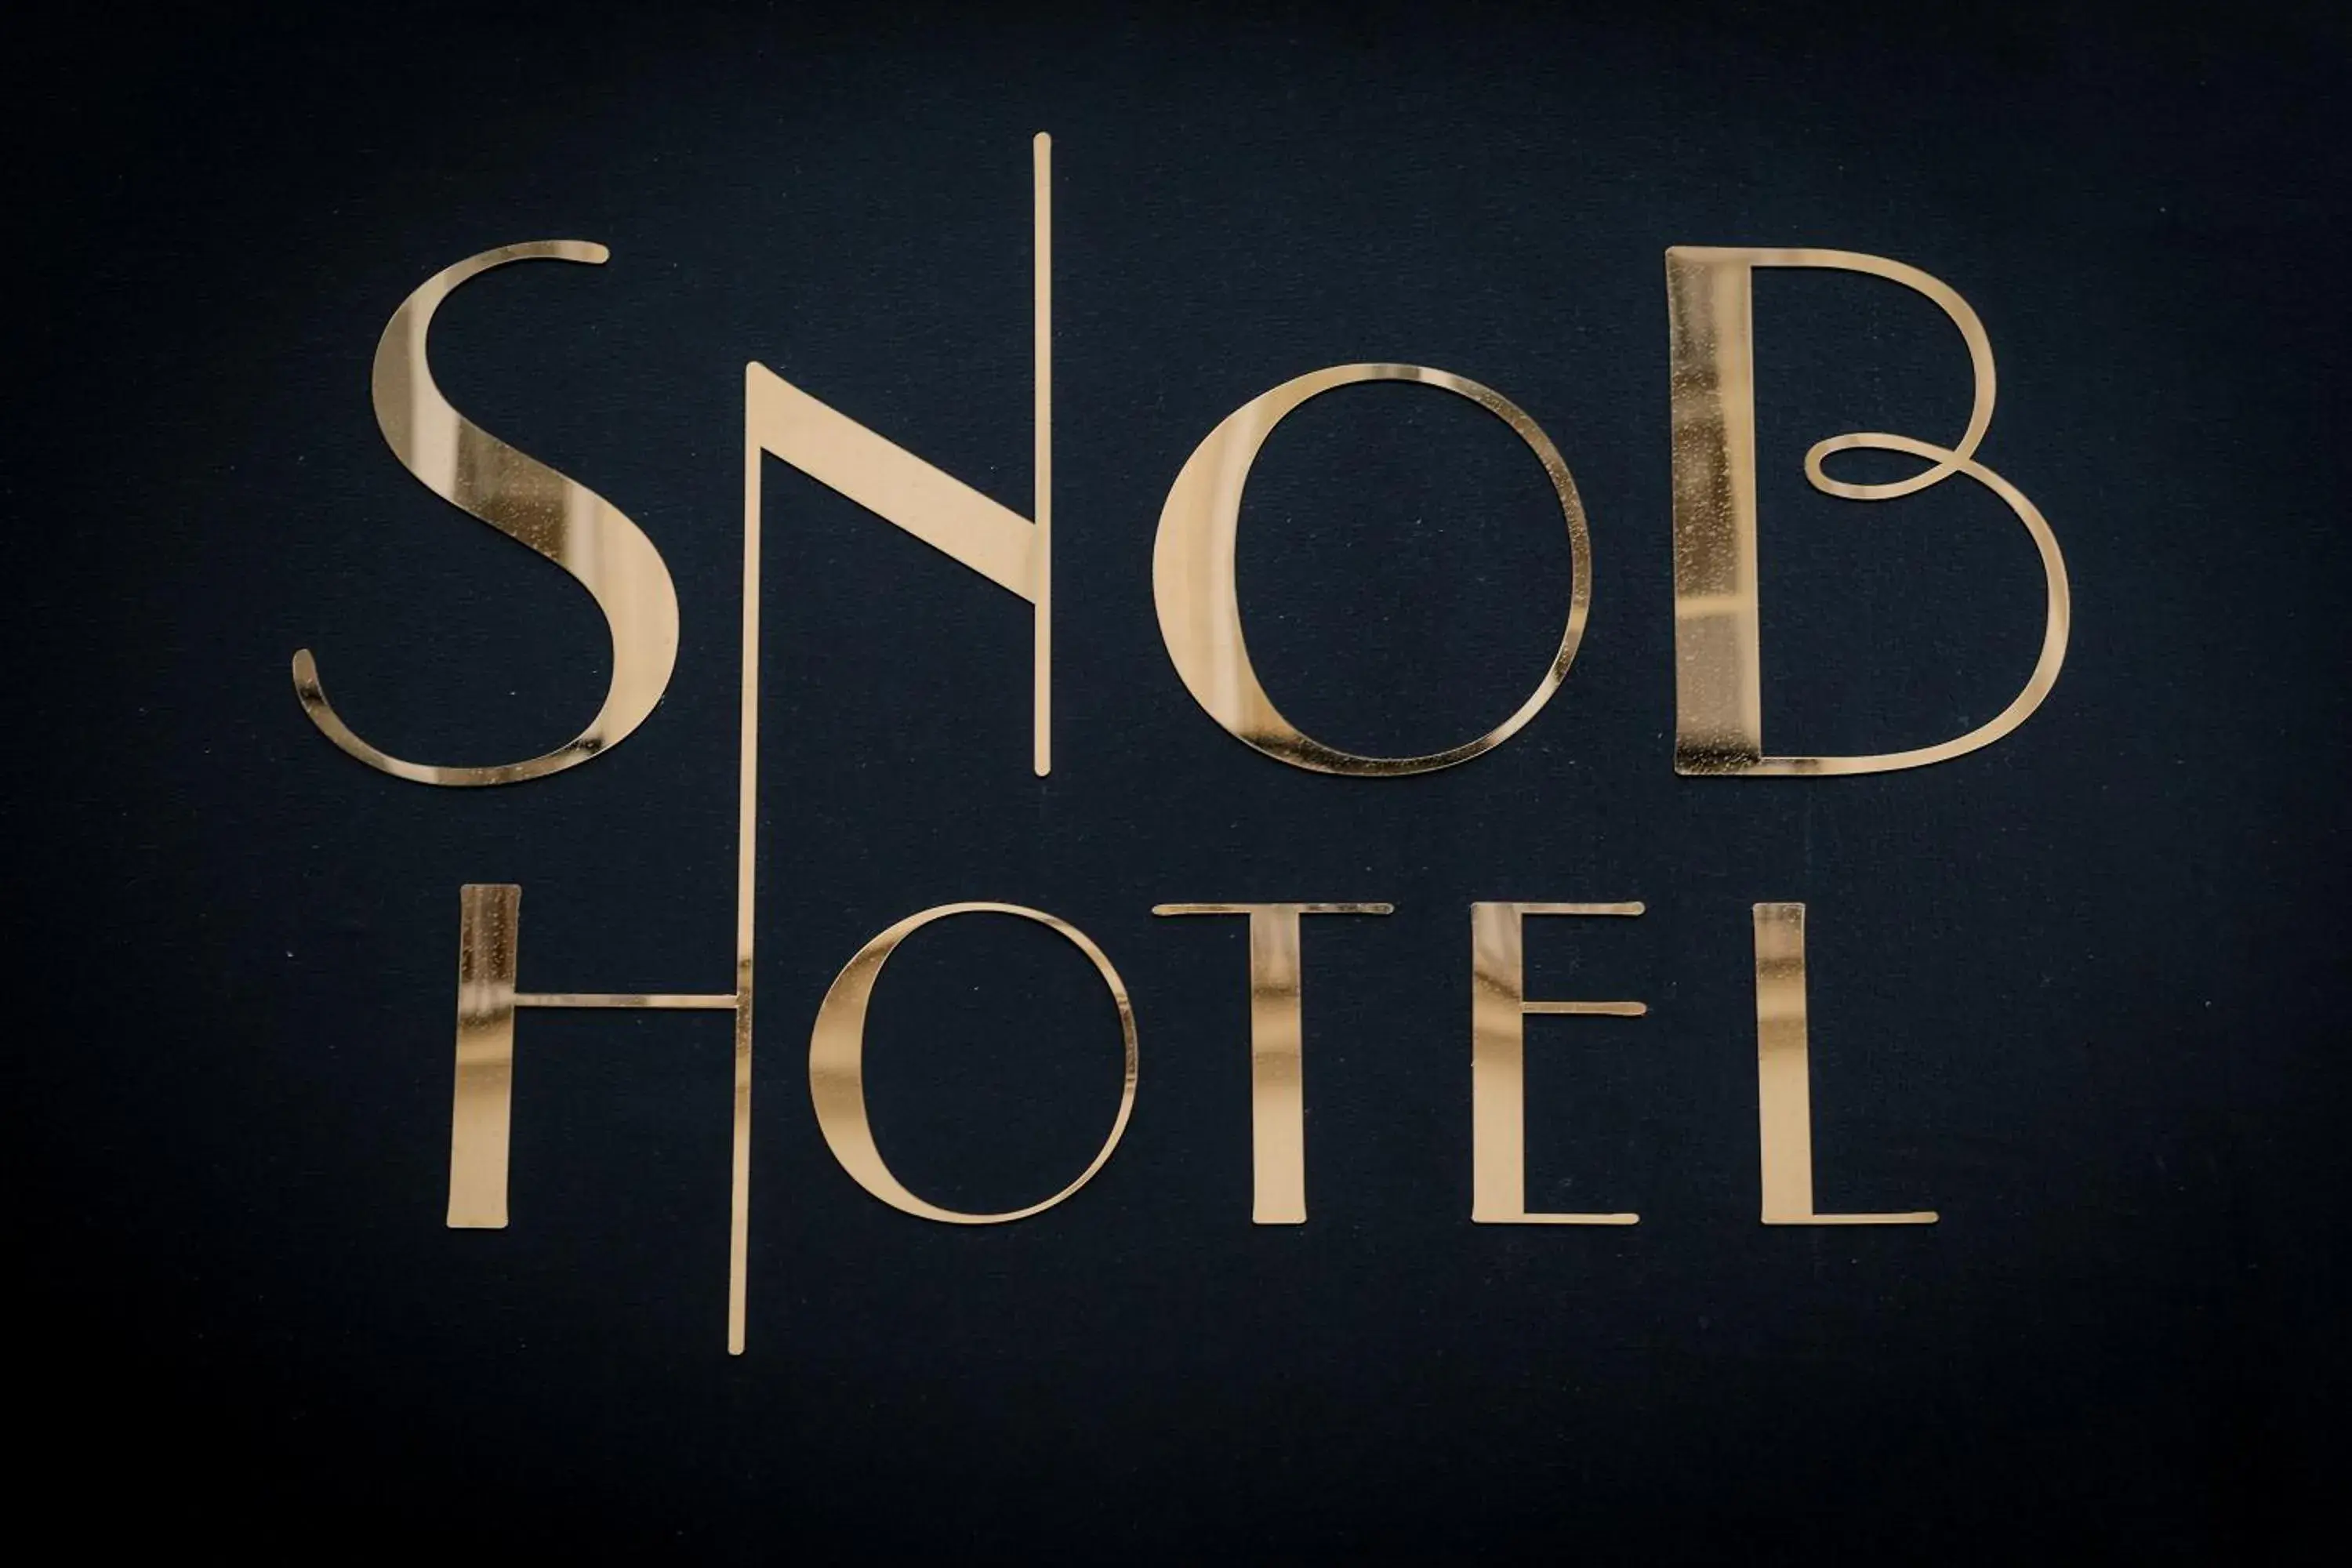 Property logo or sign in Snob Hotel by Elegancia